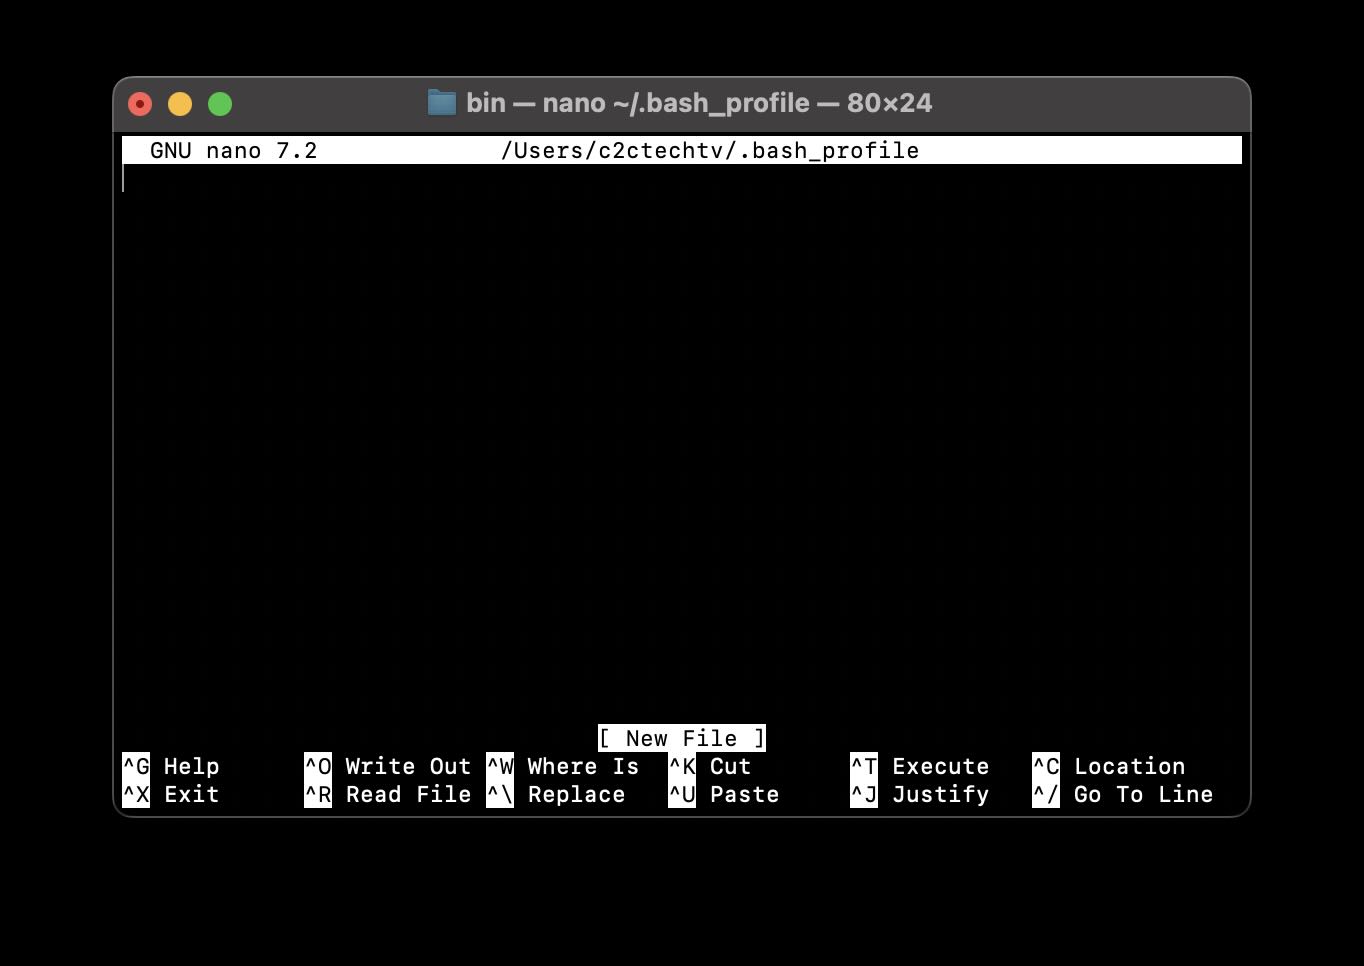 The .bash_profile file opened in Nano on Mac Terminal